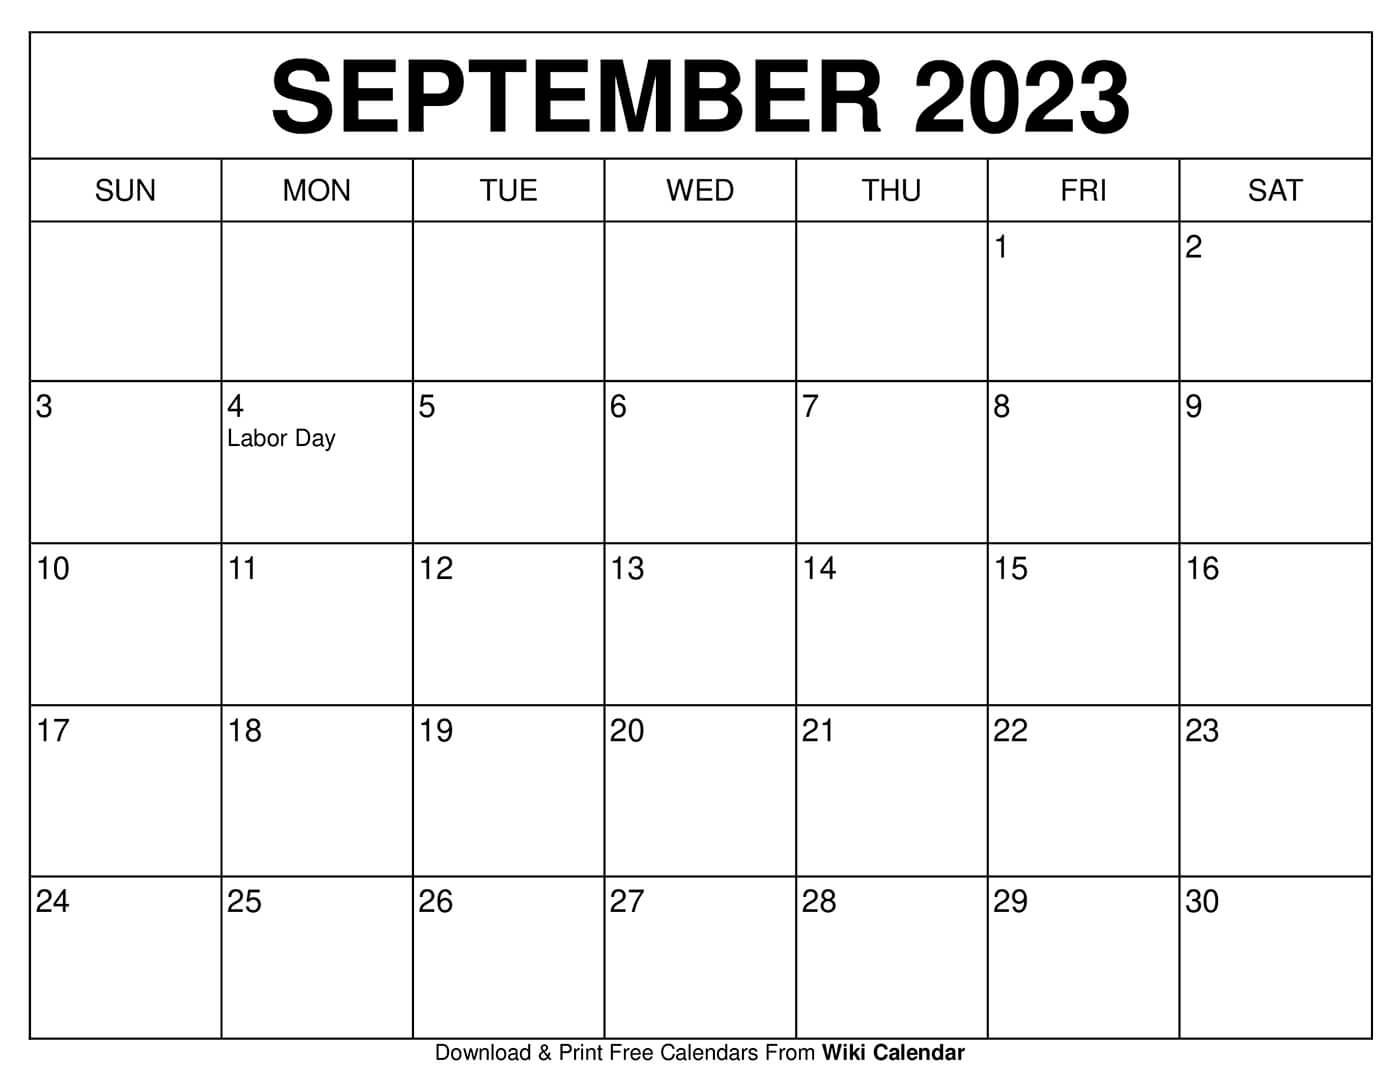 free-printable-september-2023-calendar-templates-with-holidays-wiki